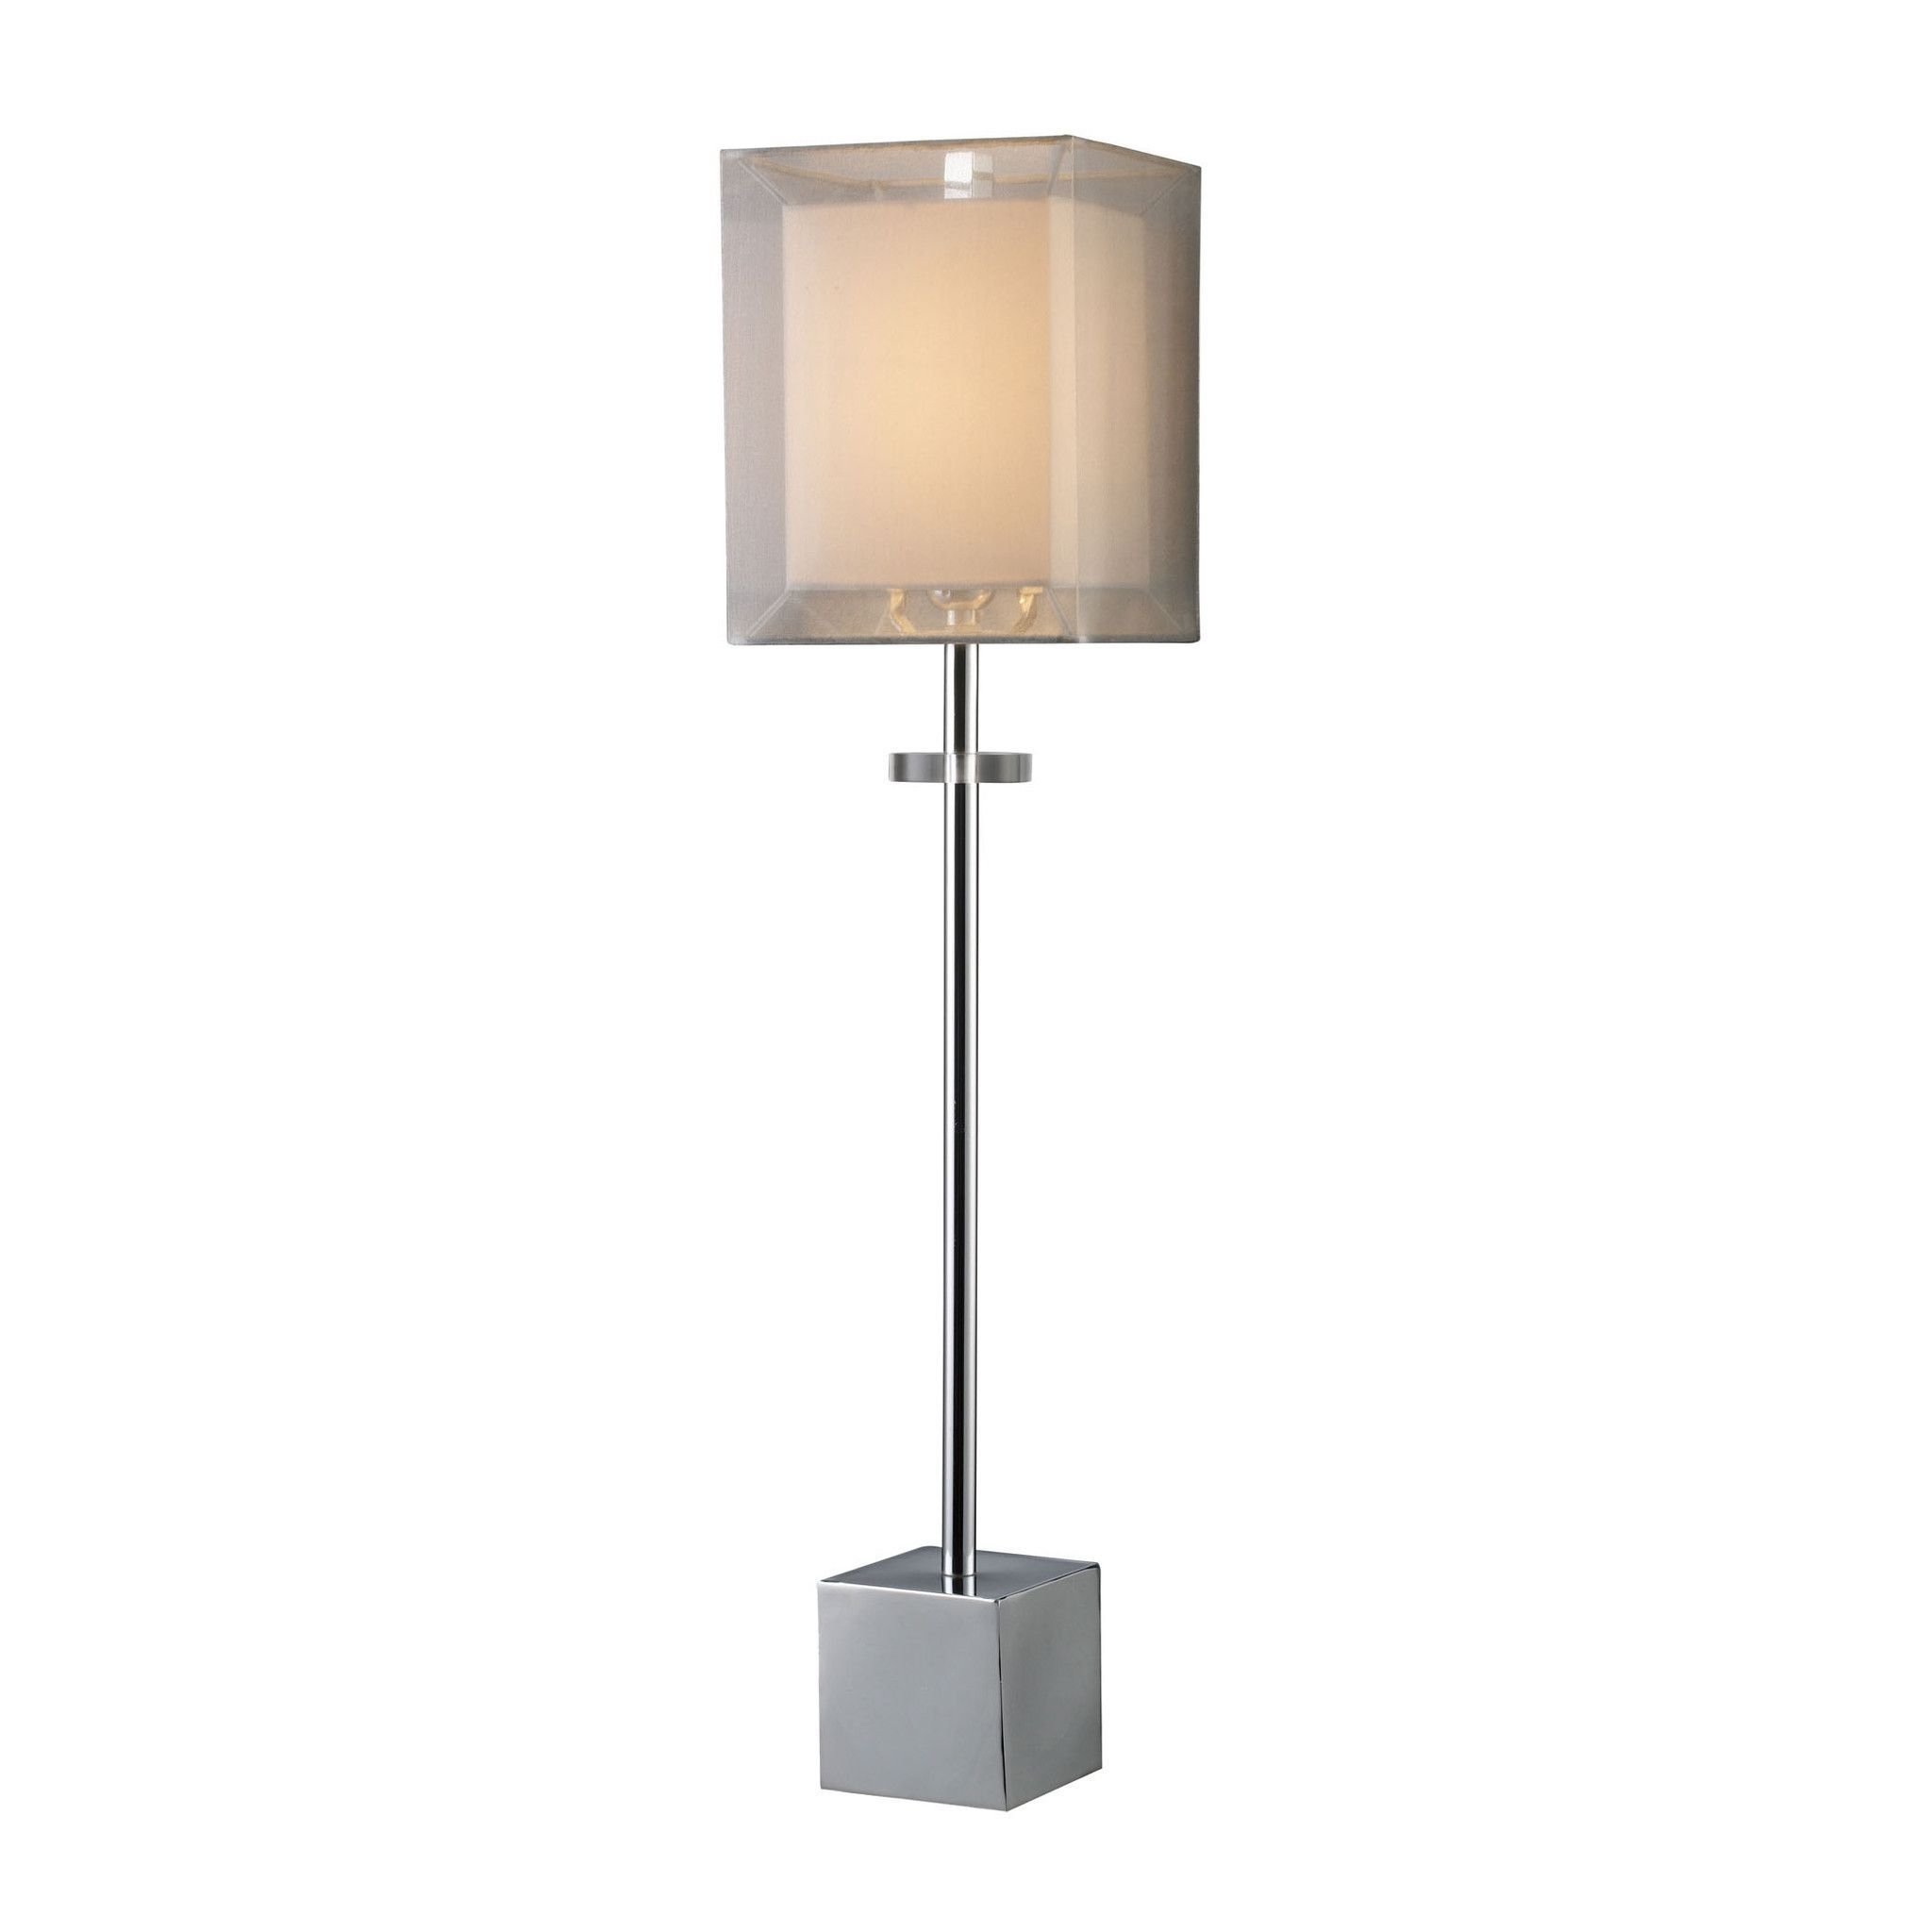 Sligo Buffet 30" H Table Lamp with Square Shade